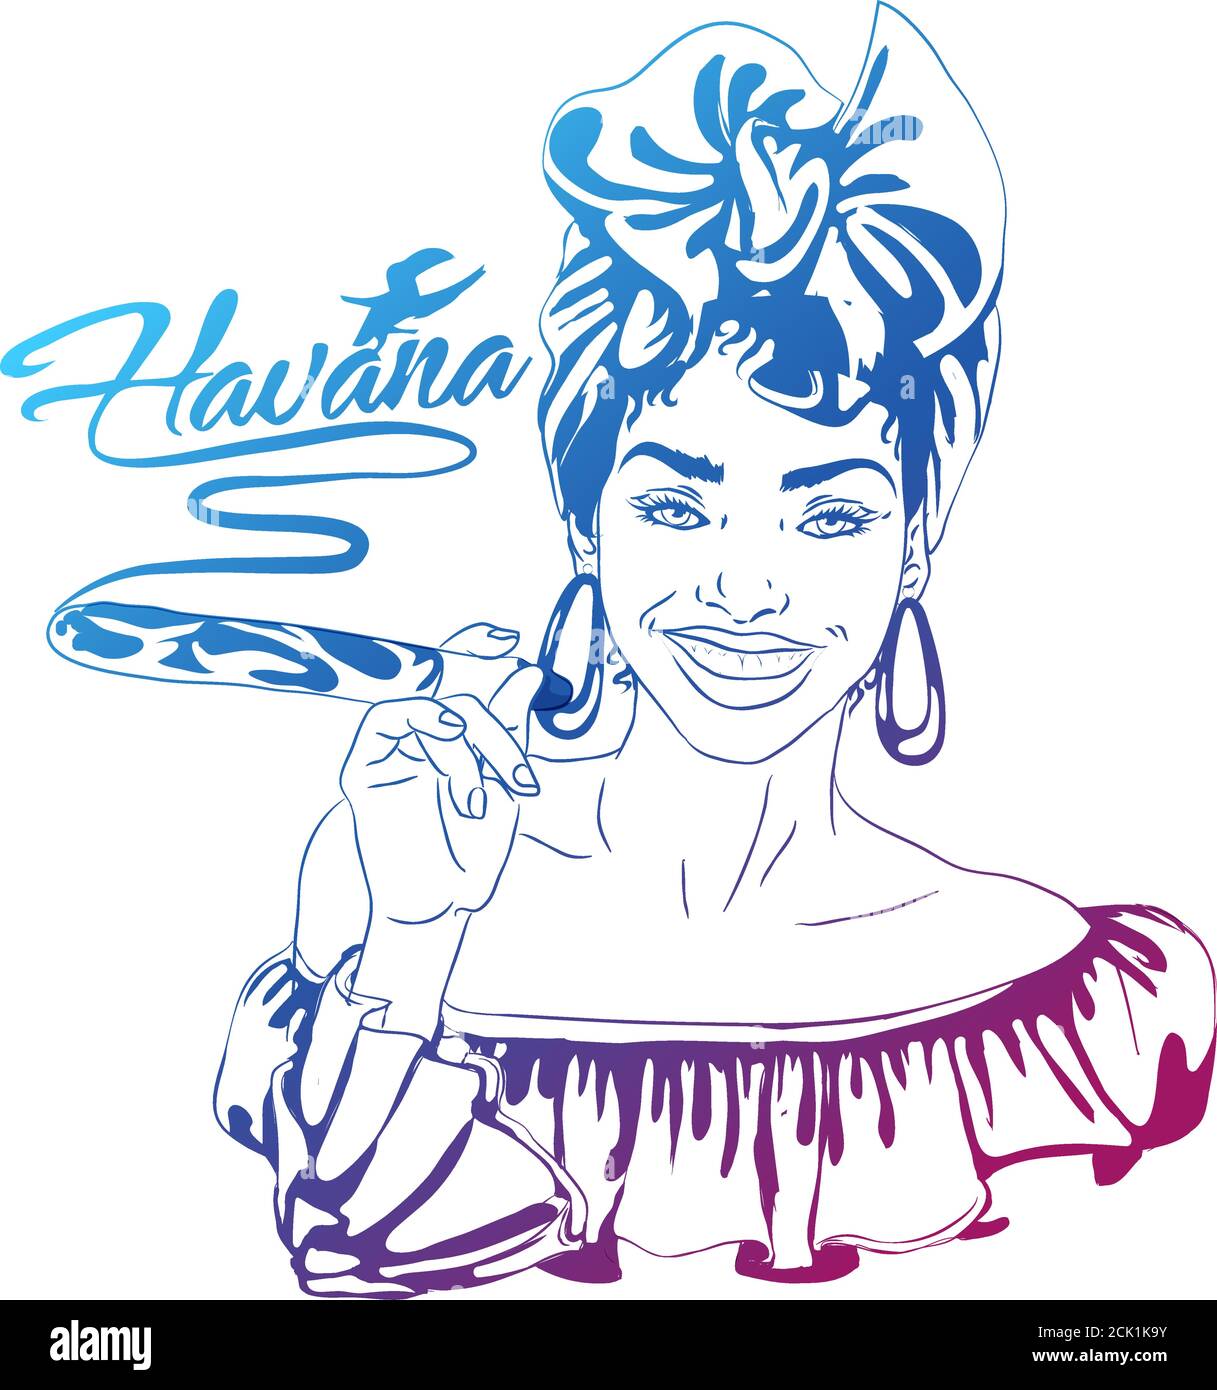 Cara de mujer cubana ilustraciãn vectorial de dibujos animados para pãster musical cuba chica con decoraciãn floral y cigarro pãster grotco de caricatura ãtnica caribeãa imagen vector de stock